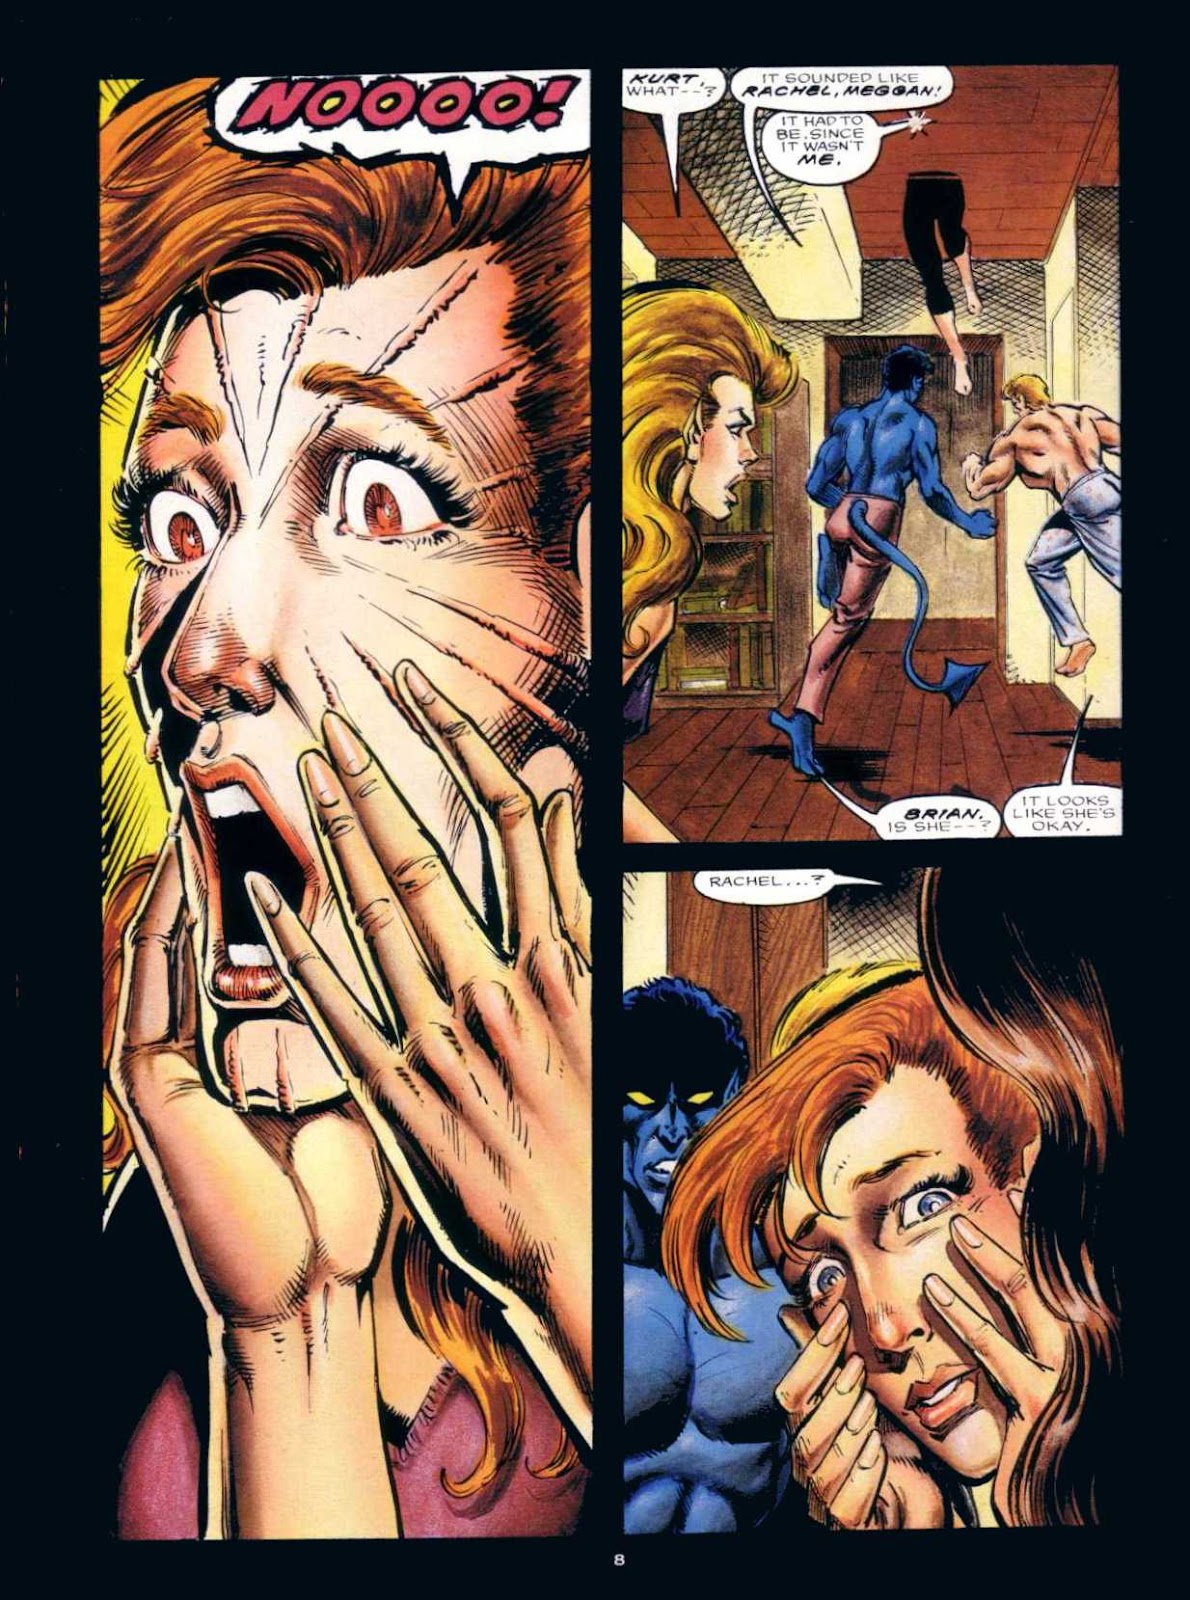 Marvel Graphic Novel issue 66 - Excalibur - Weird War III - Page 8